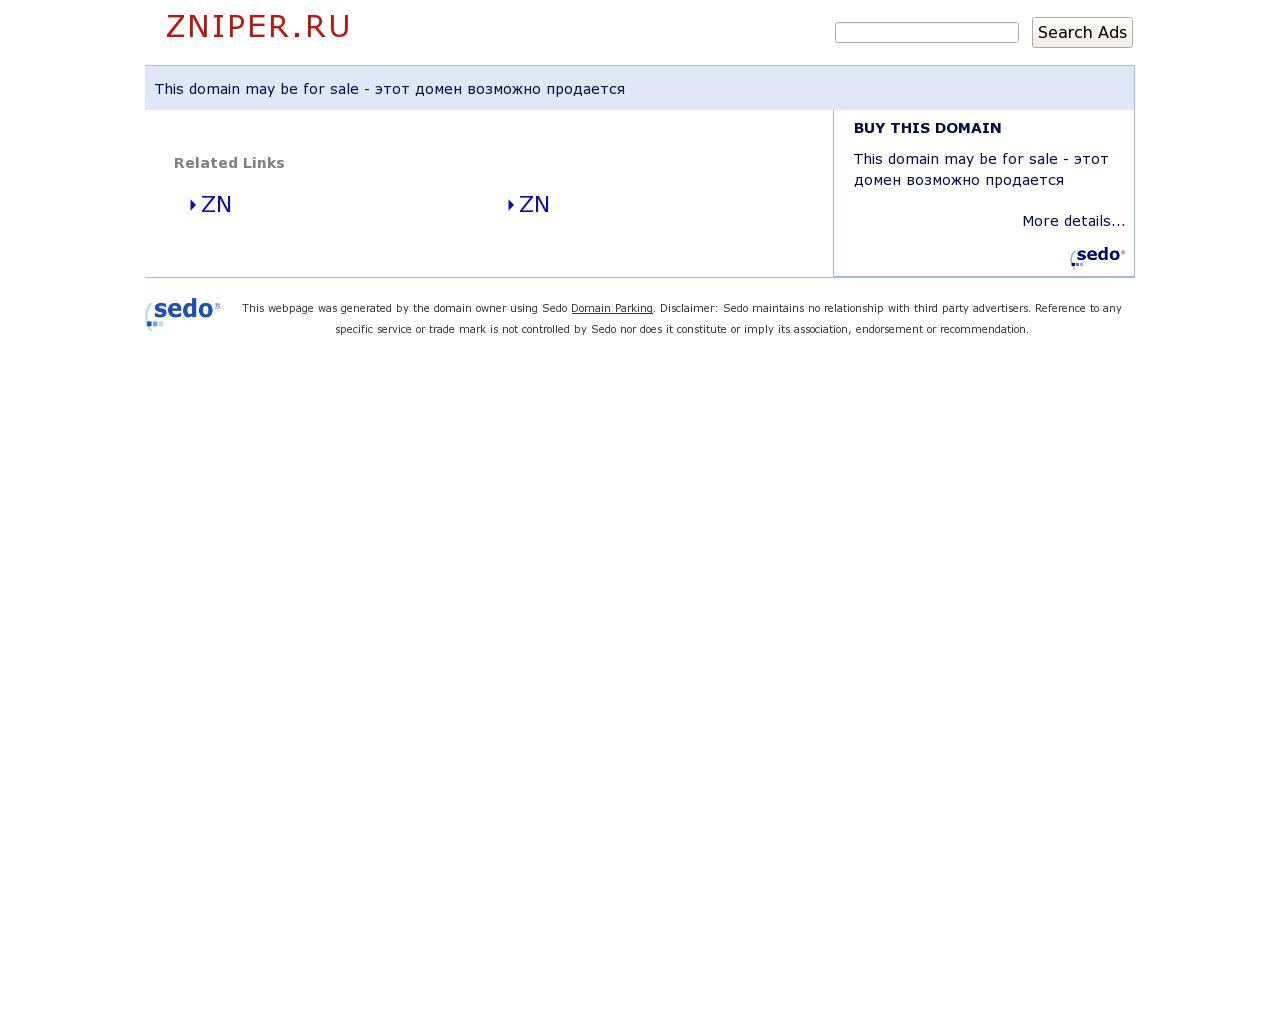 Изображение сайта zniper.ru в разрешении 1280x1024